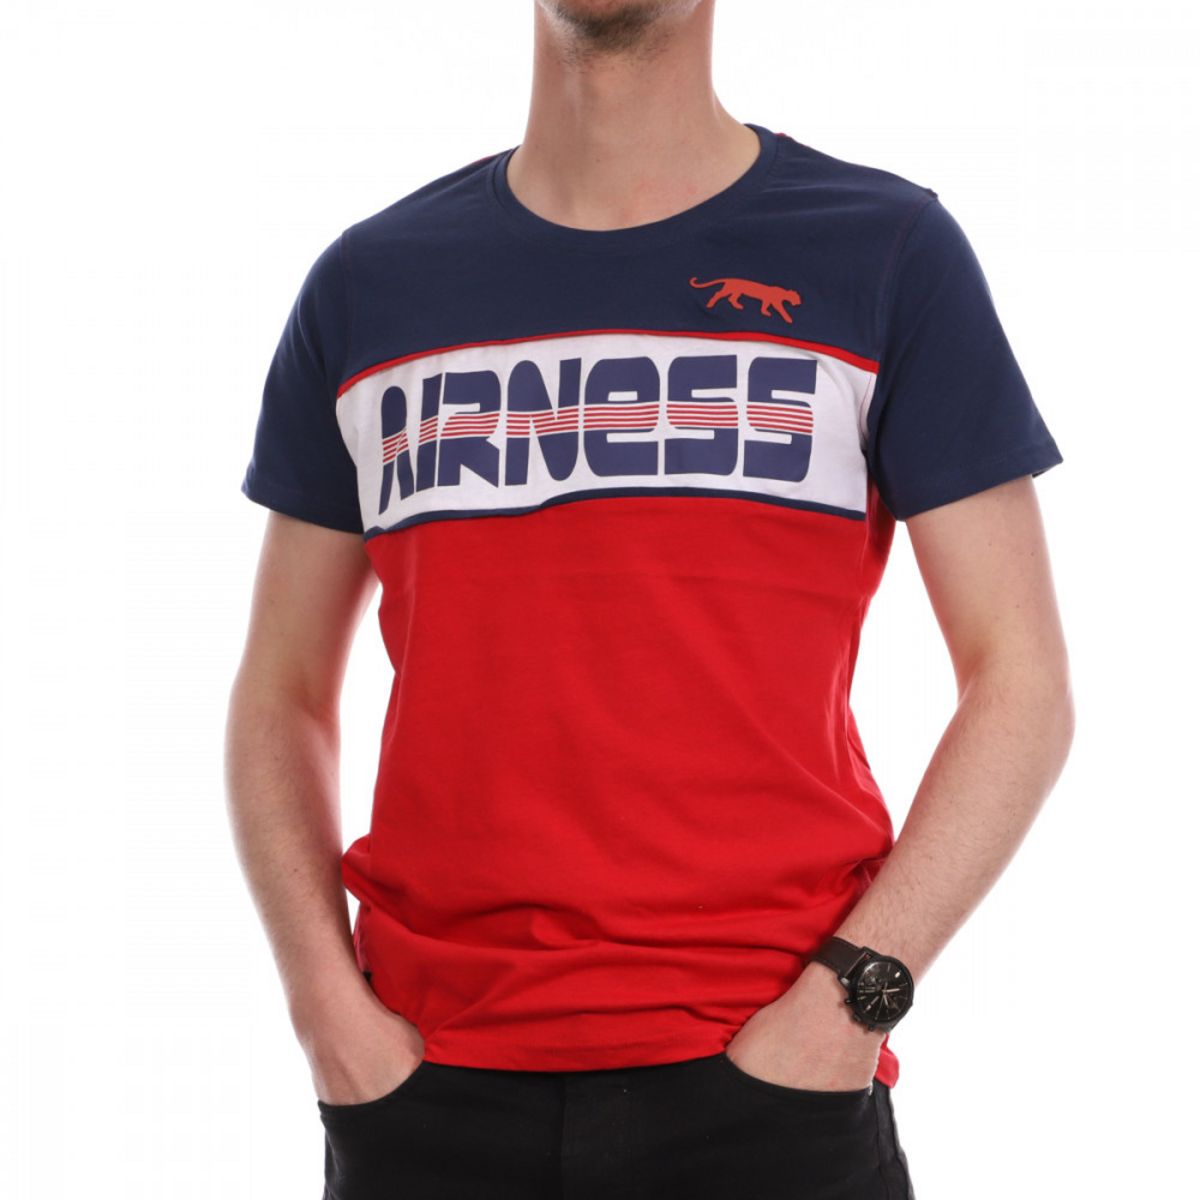  T-shirt Rouge/Bleu Homme Airness Bravery